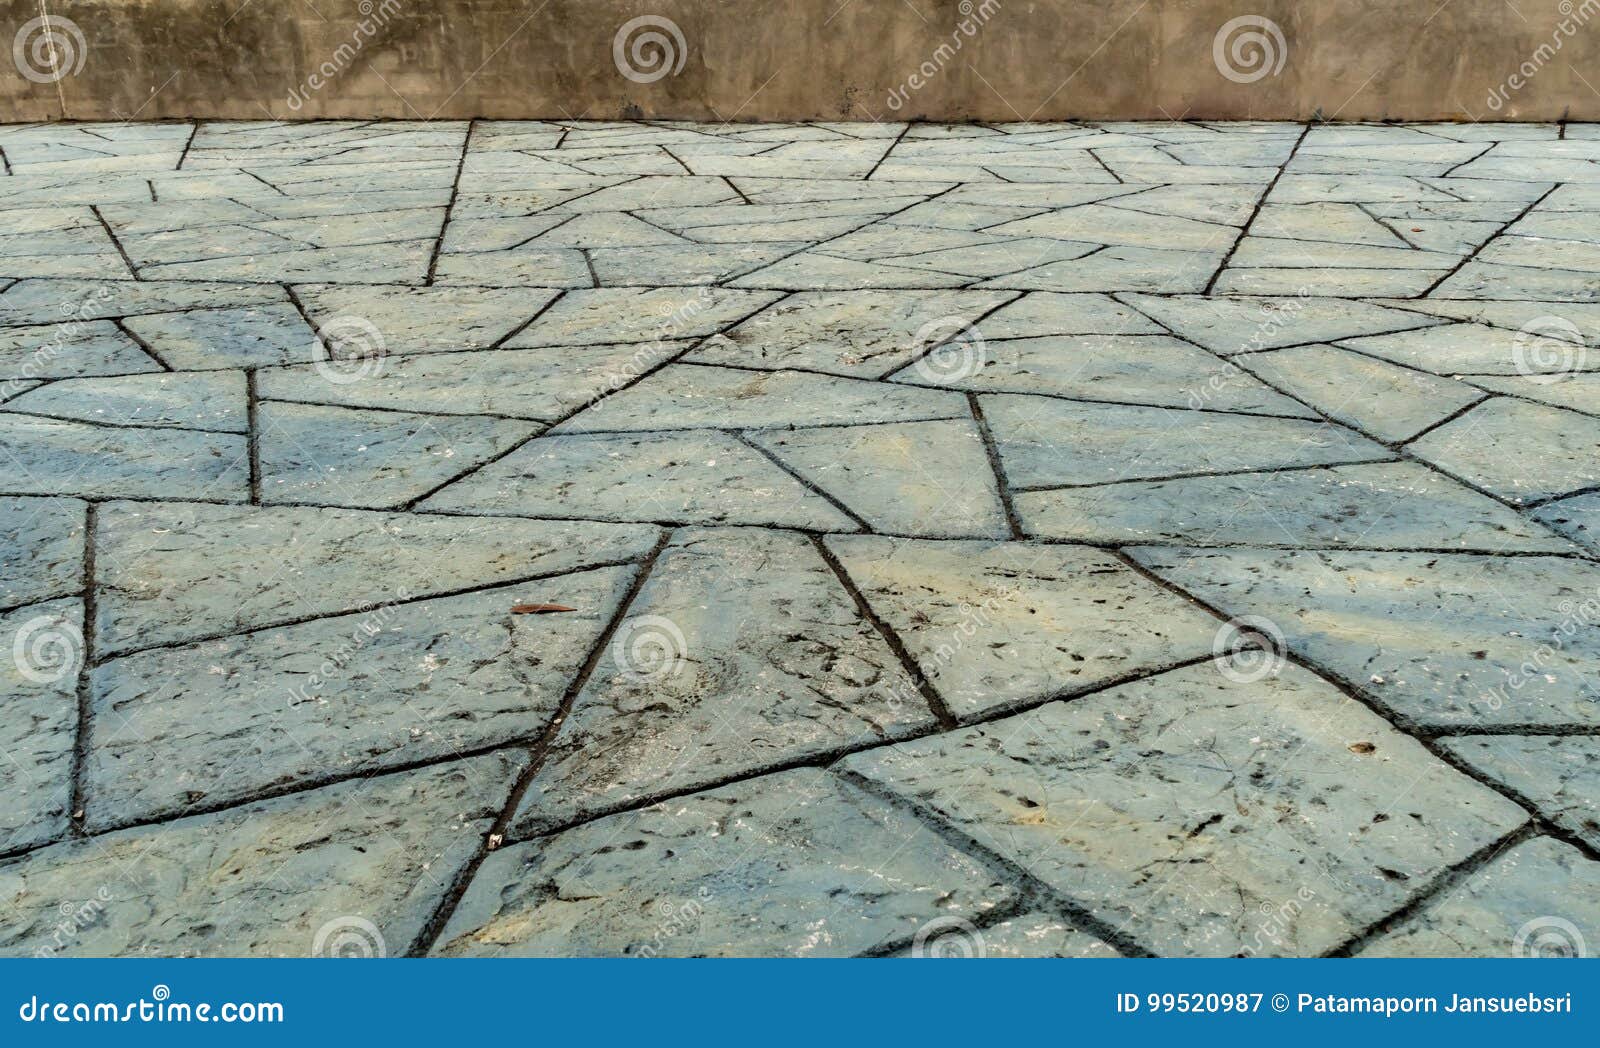 Concrete block floor stock image. Image of dirty, texture - 99520987